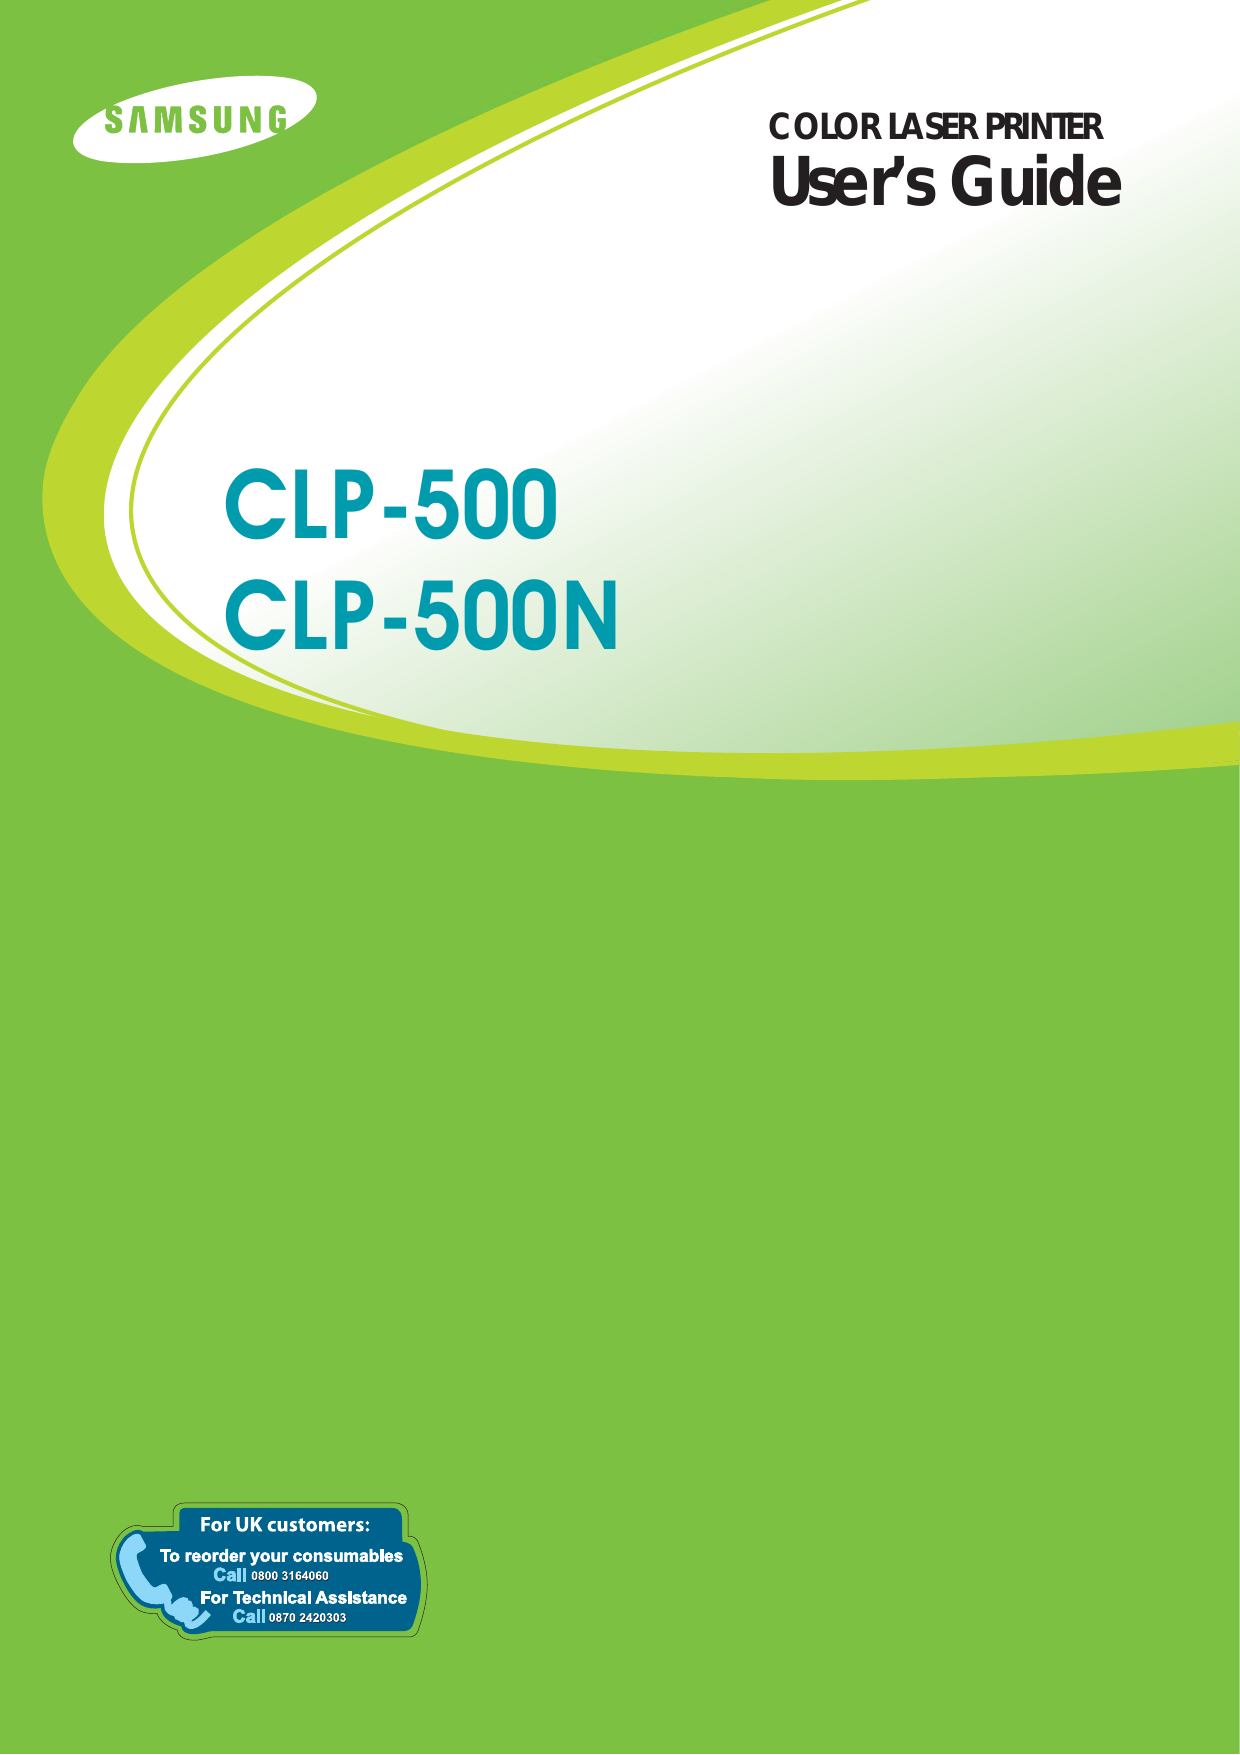 COLOR LASER PRINTERUser’s GuideCLP-500CLP-500N